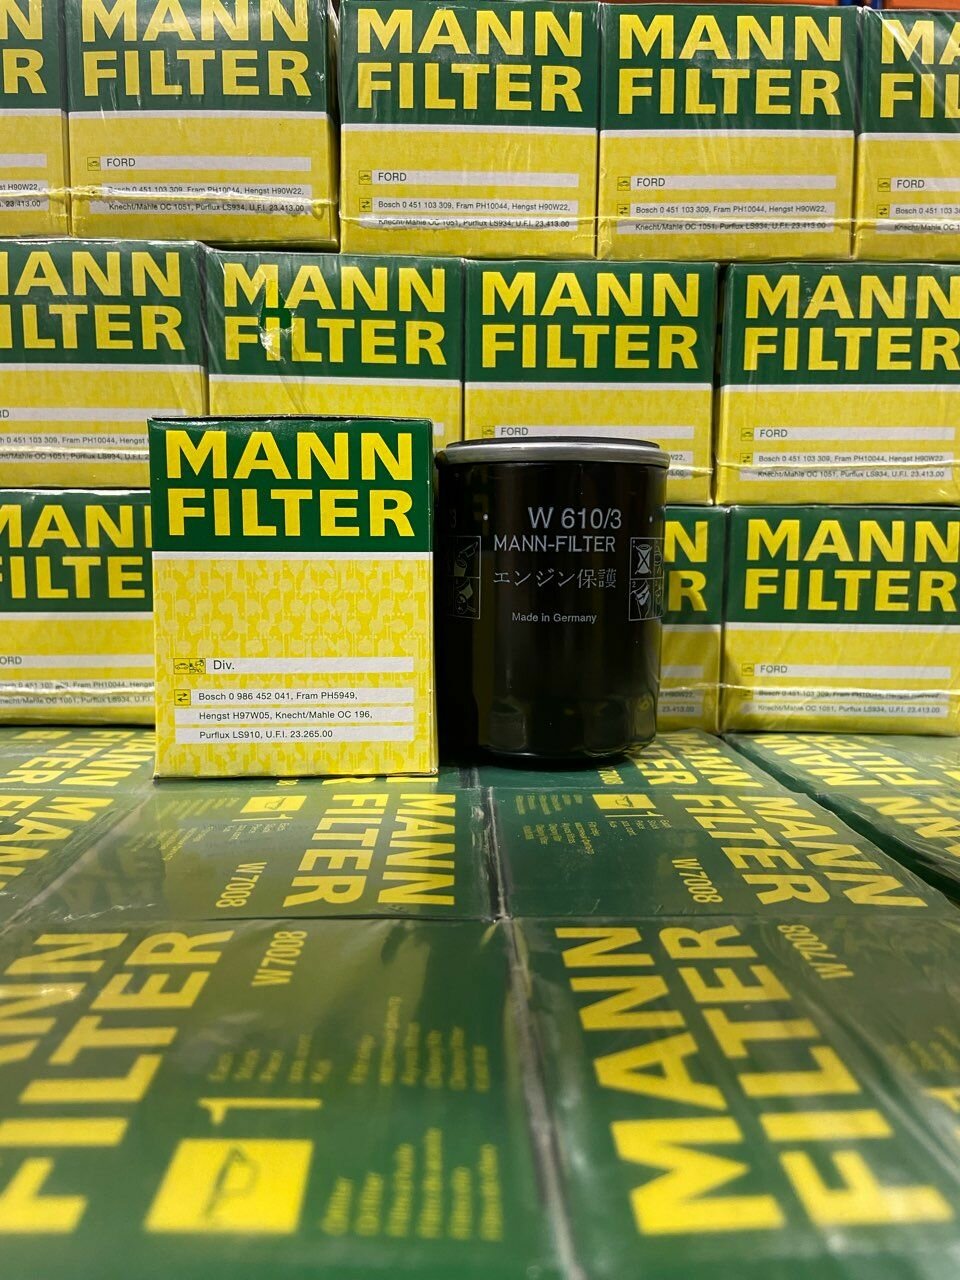 Масляный фильтр w610/3 mann-filter